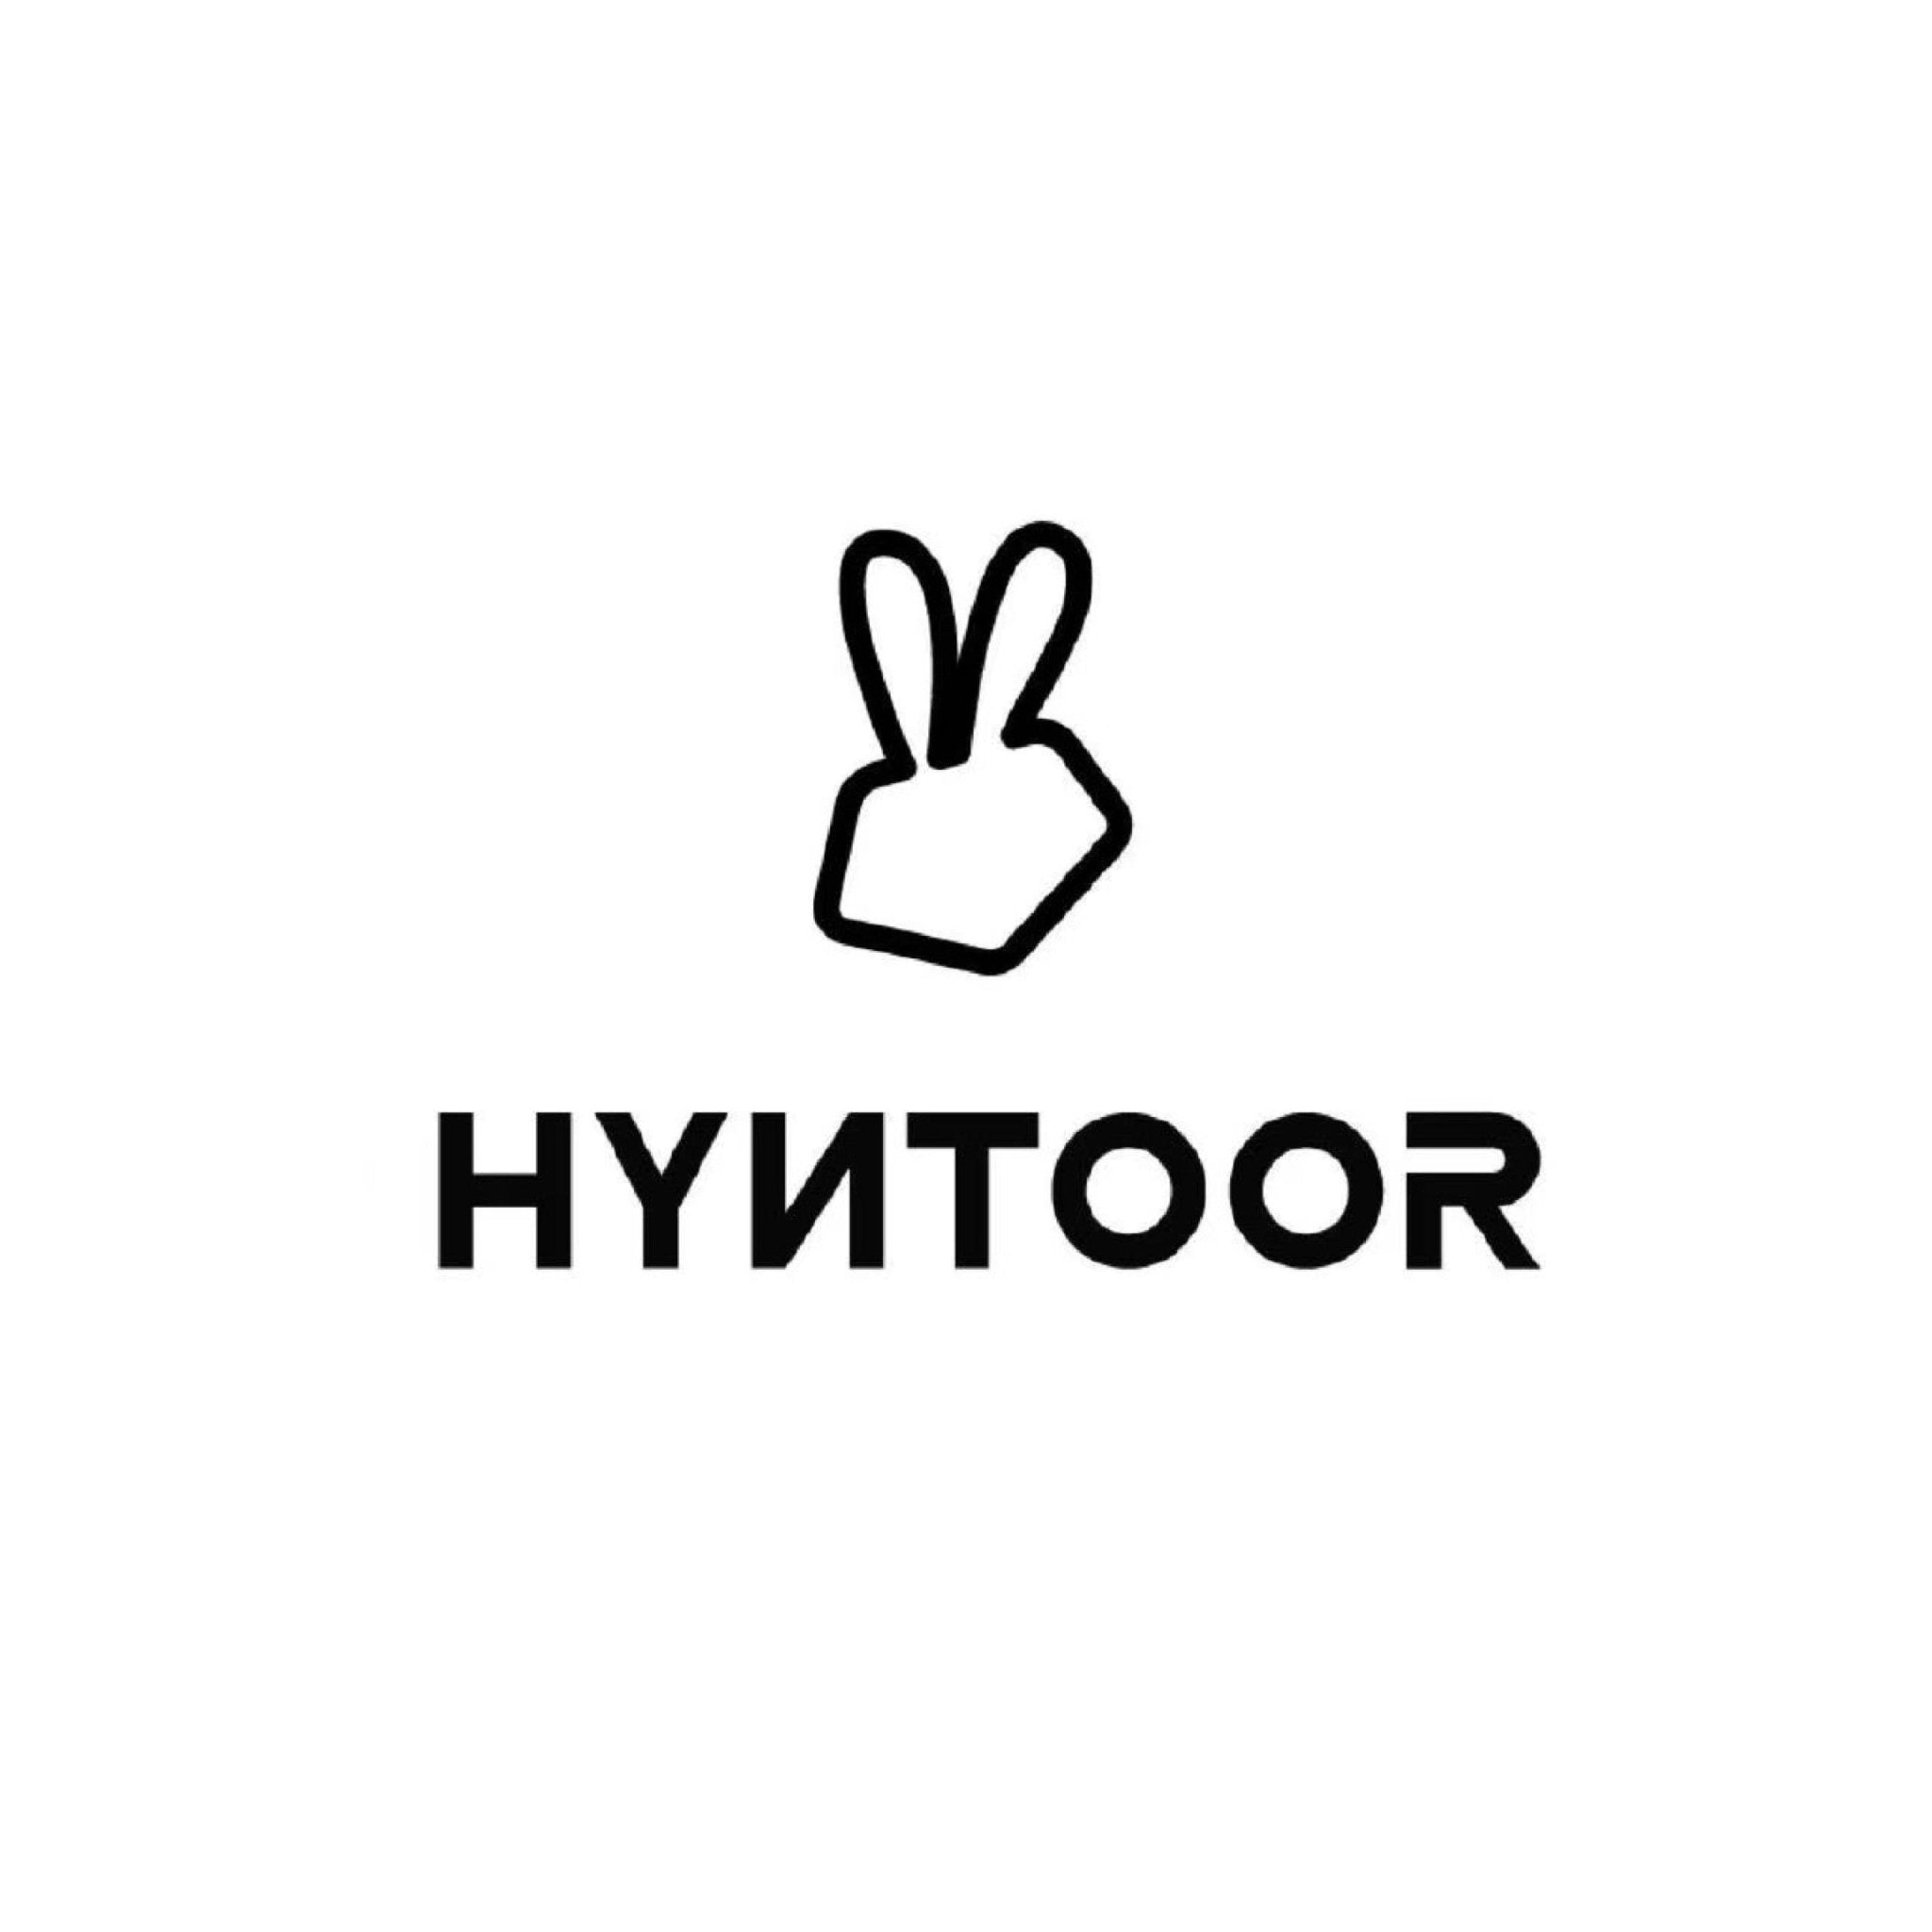 HYNTOOR | 黑兔 - Chic Decent